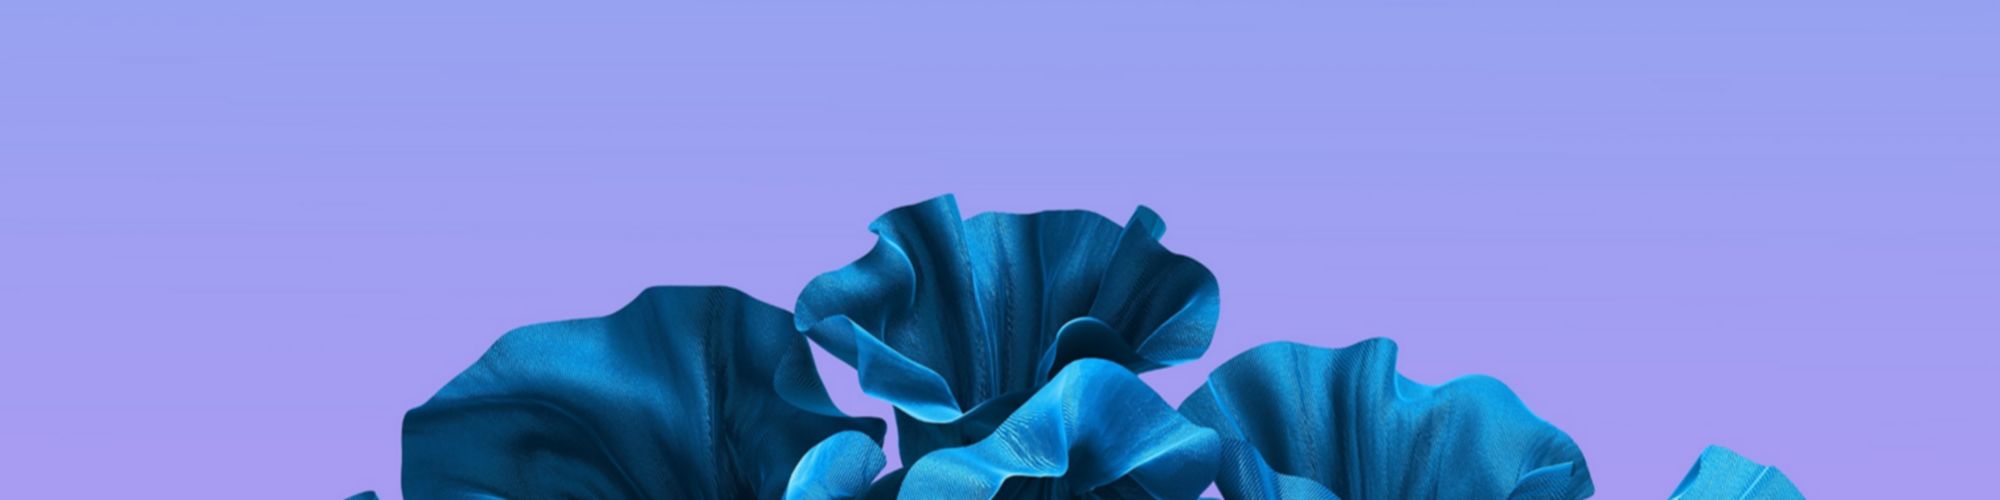 purple graphic swirl on blue background